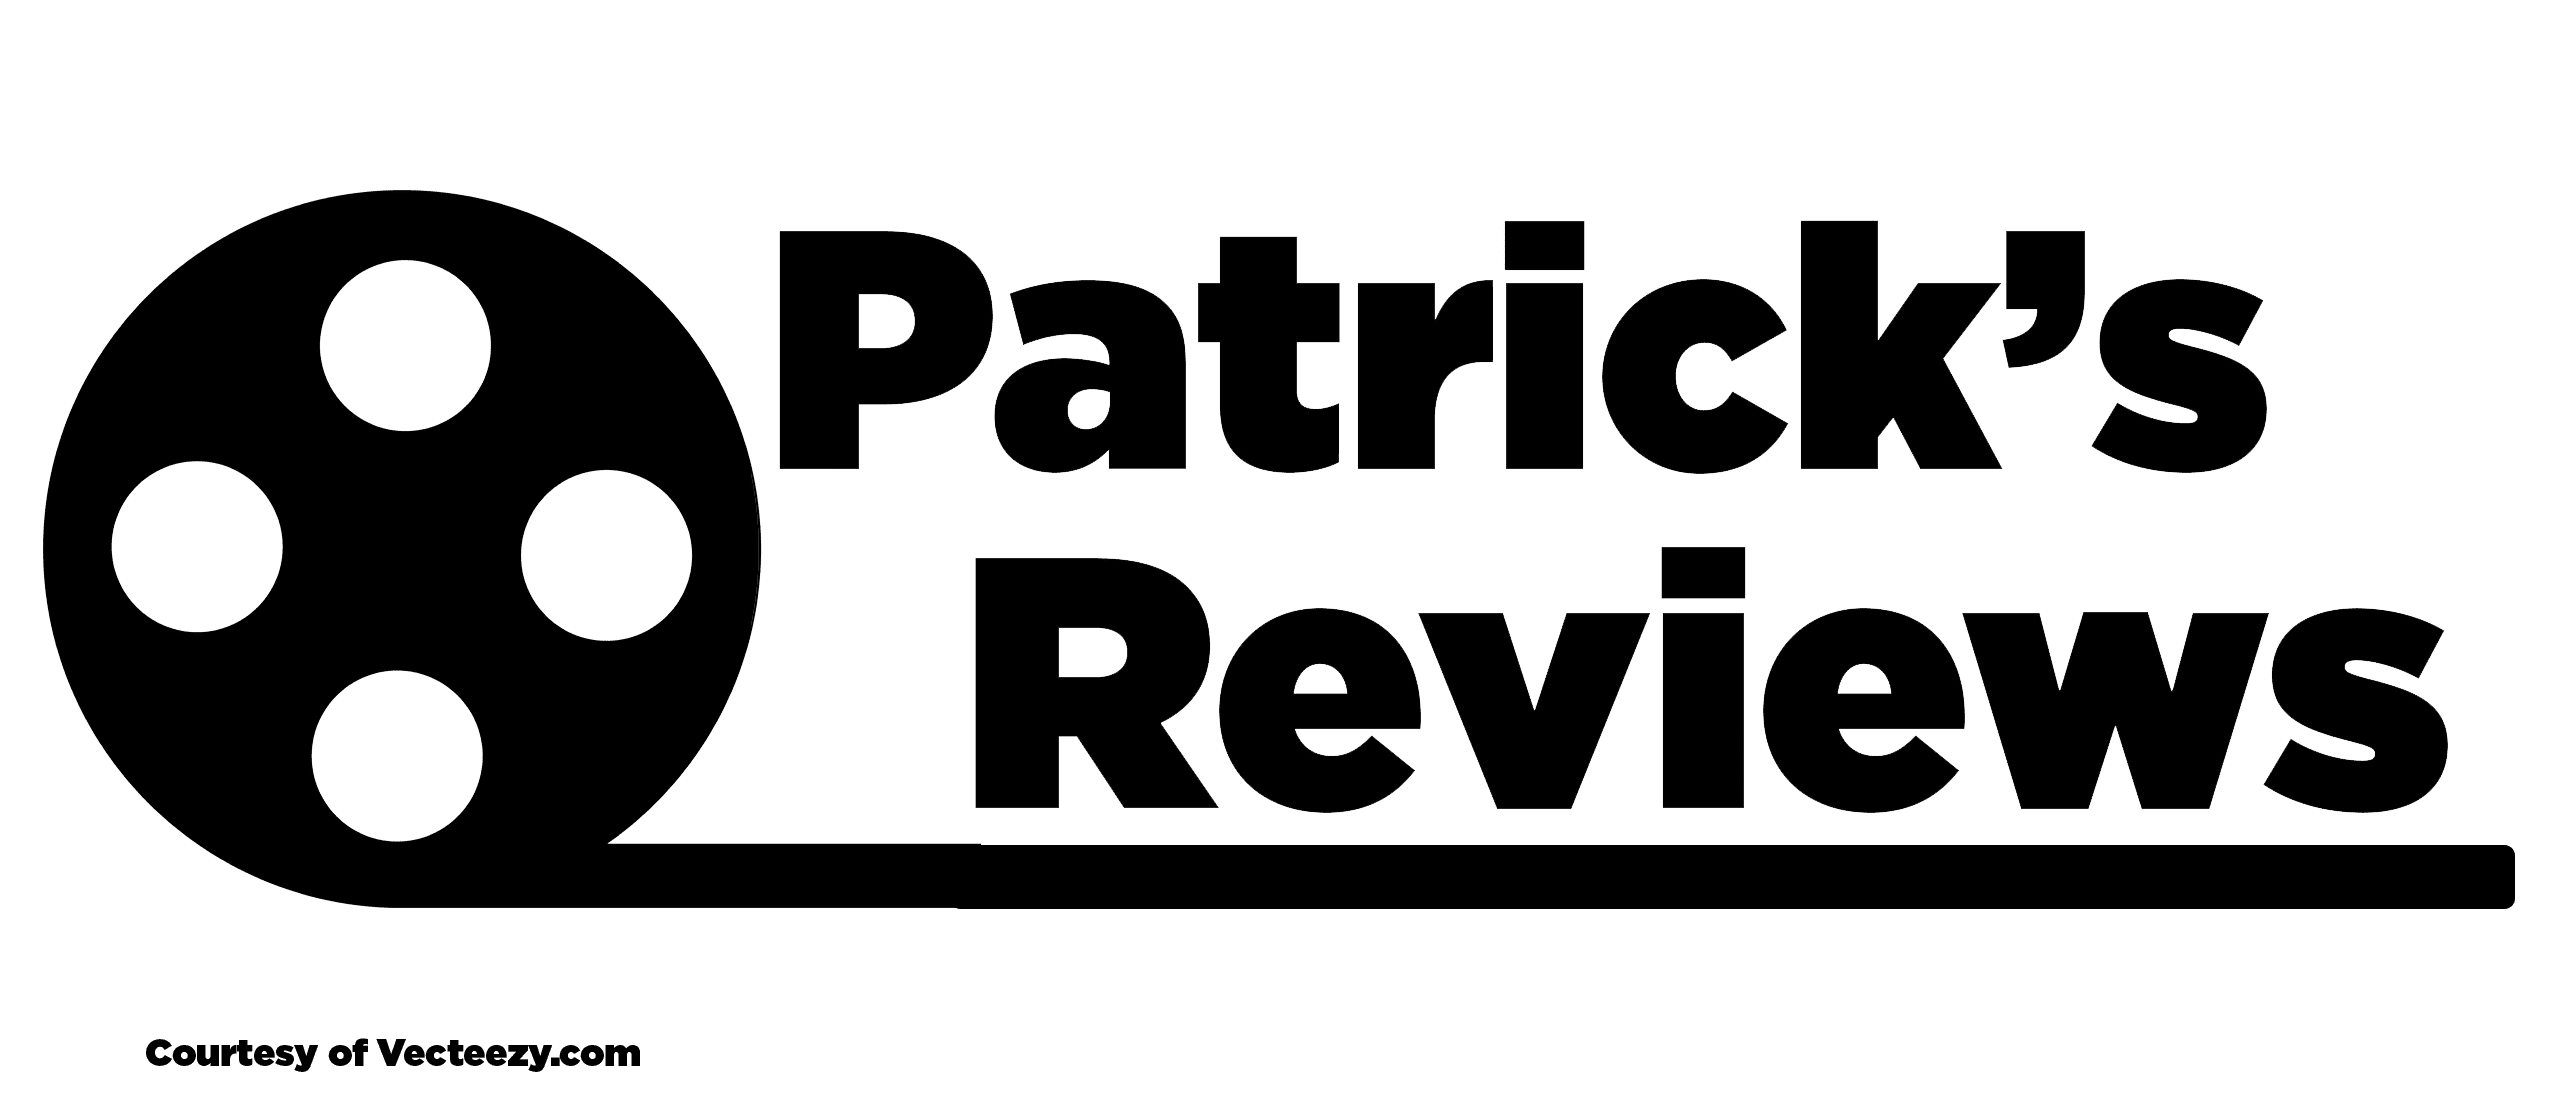 Patrick Garlock INSC 589 Site